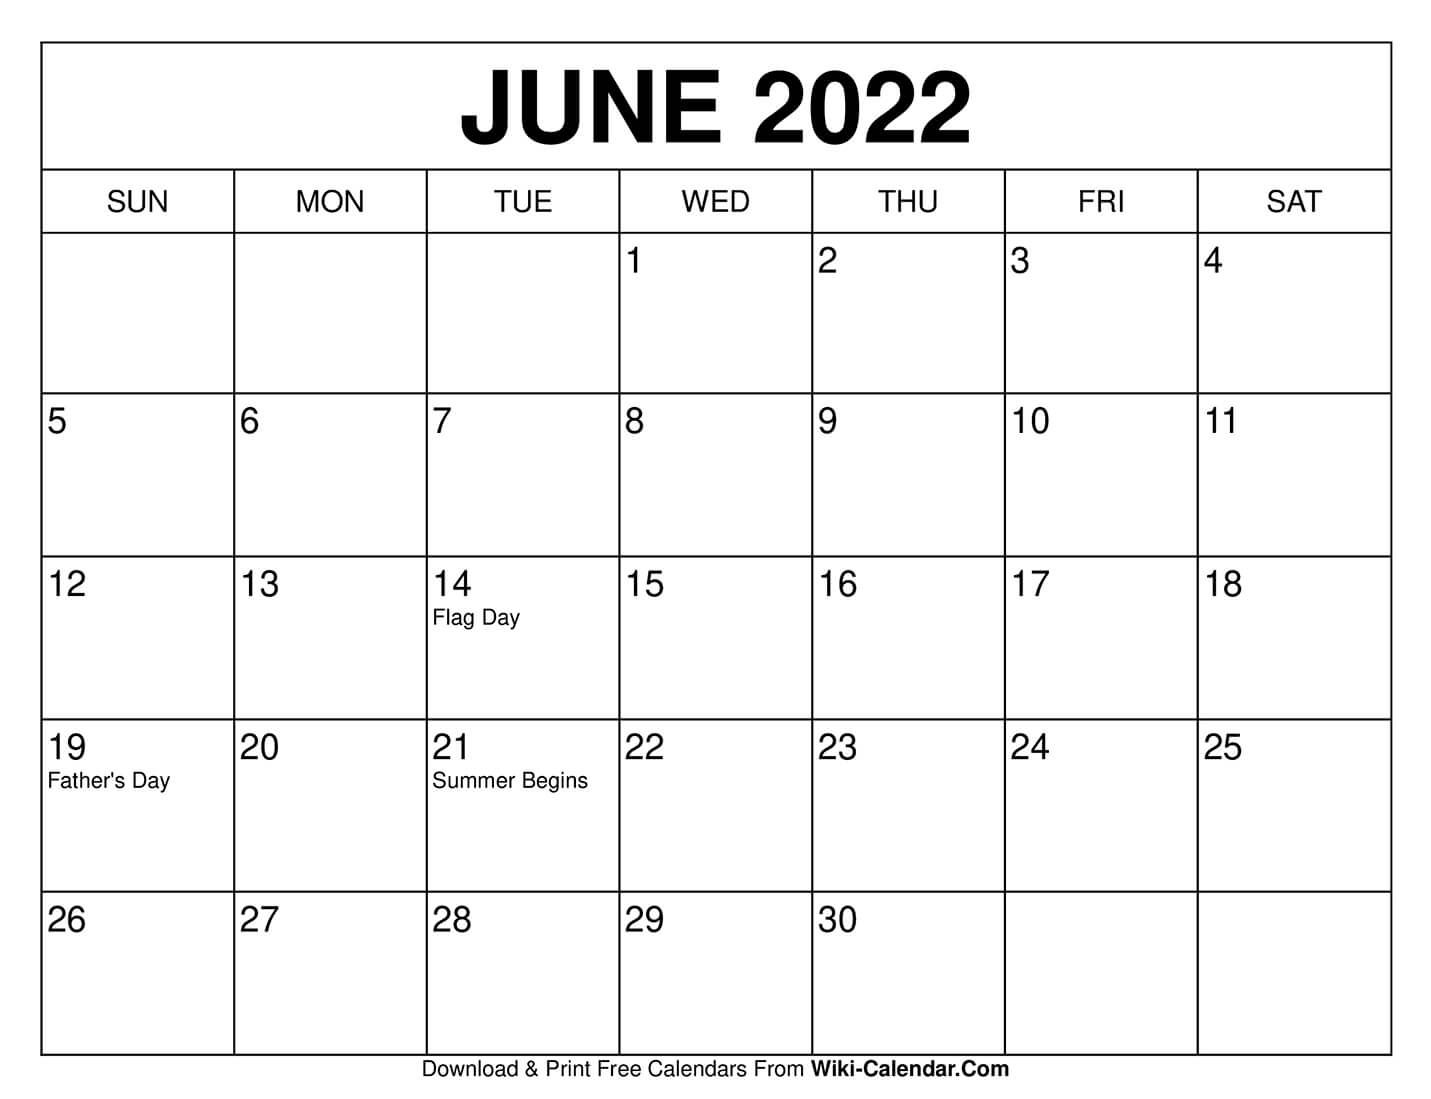 Free download June 2022 Calendar Calendar printables calendars to 1431x1099